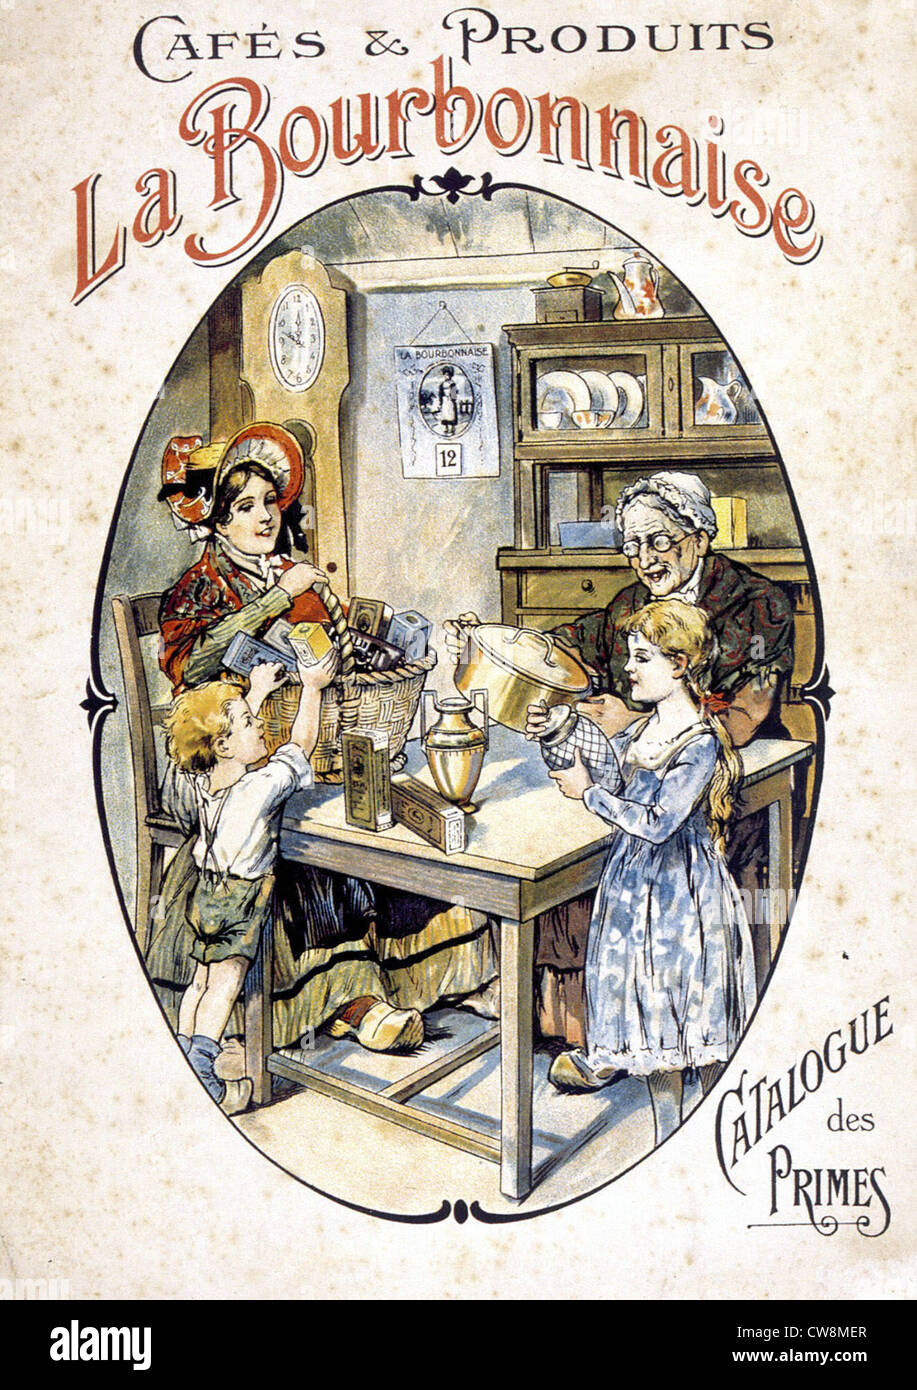 Café, Werbung aus dem späten 19. Jahrhundert Stockfoto